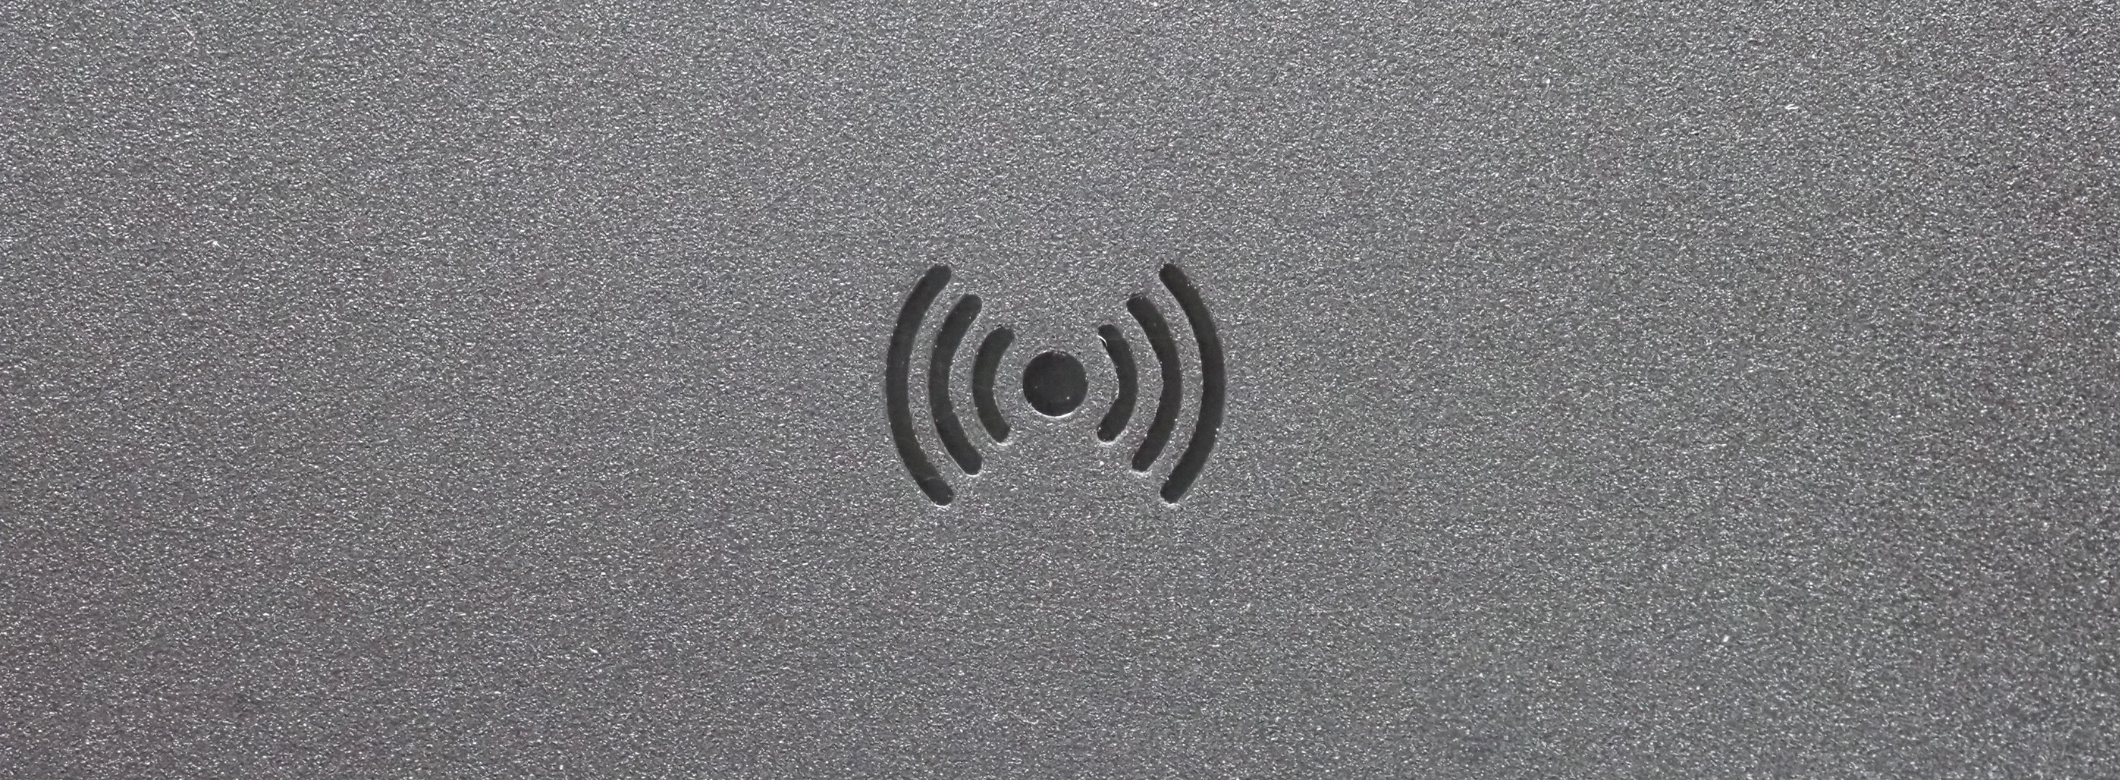 NFC vs Bluetooth hotelsleutel